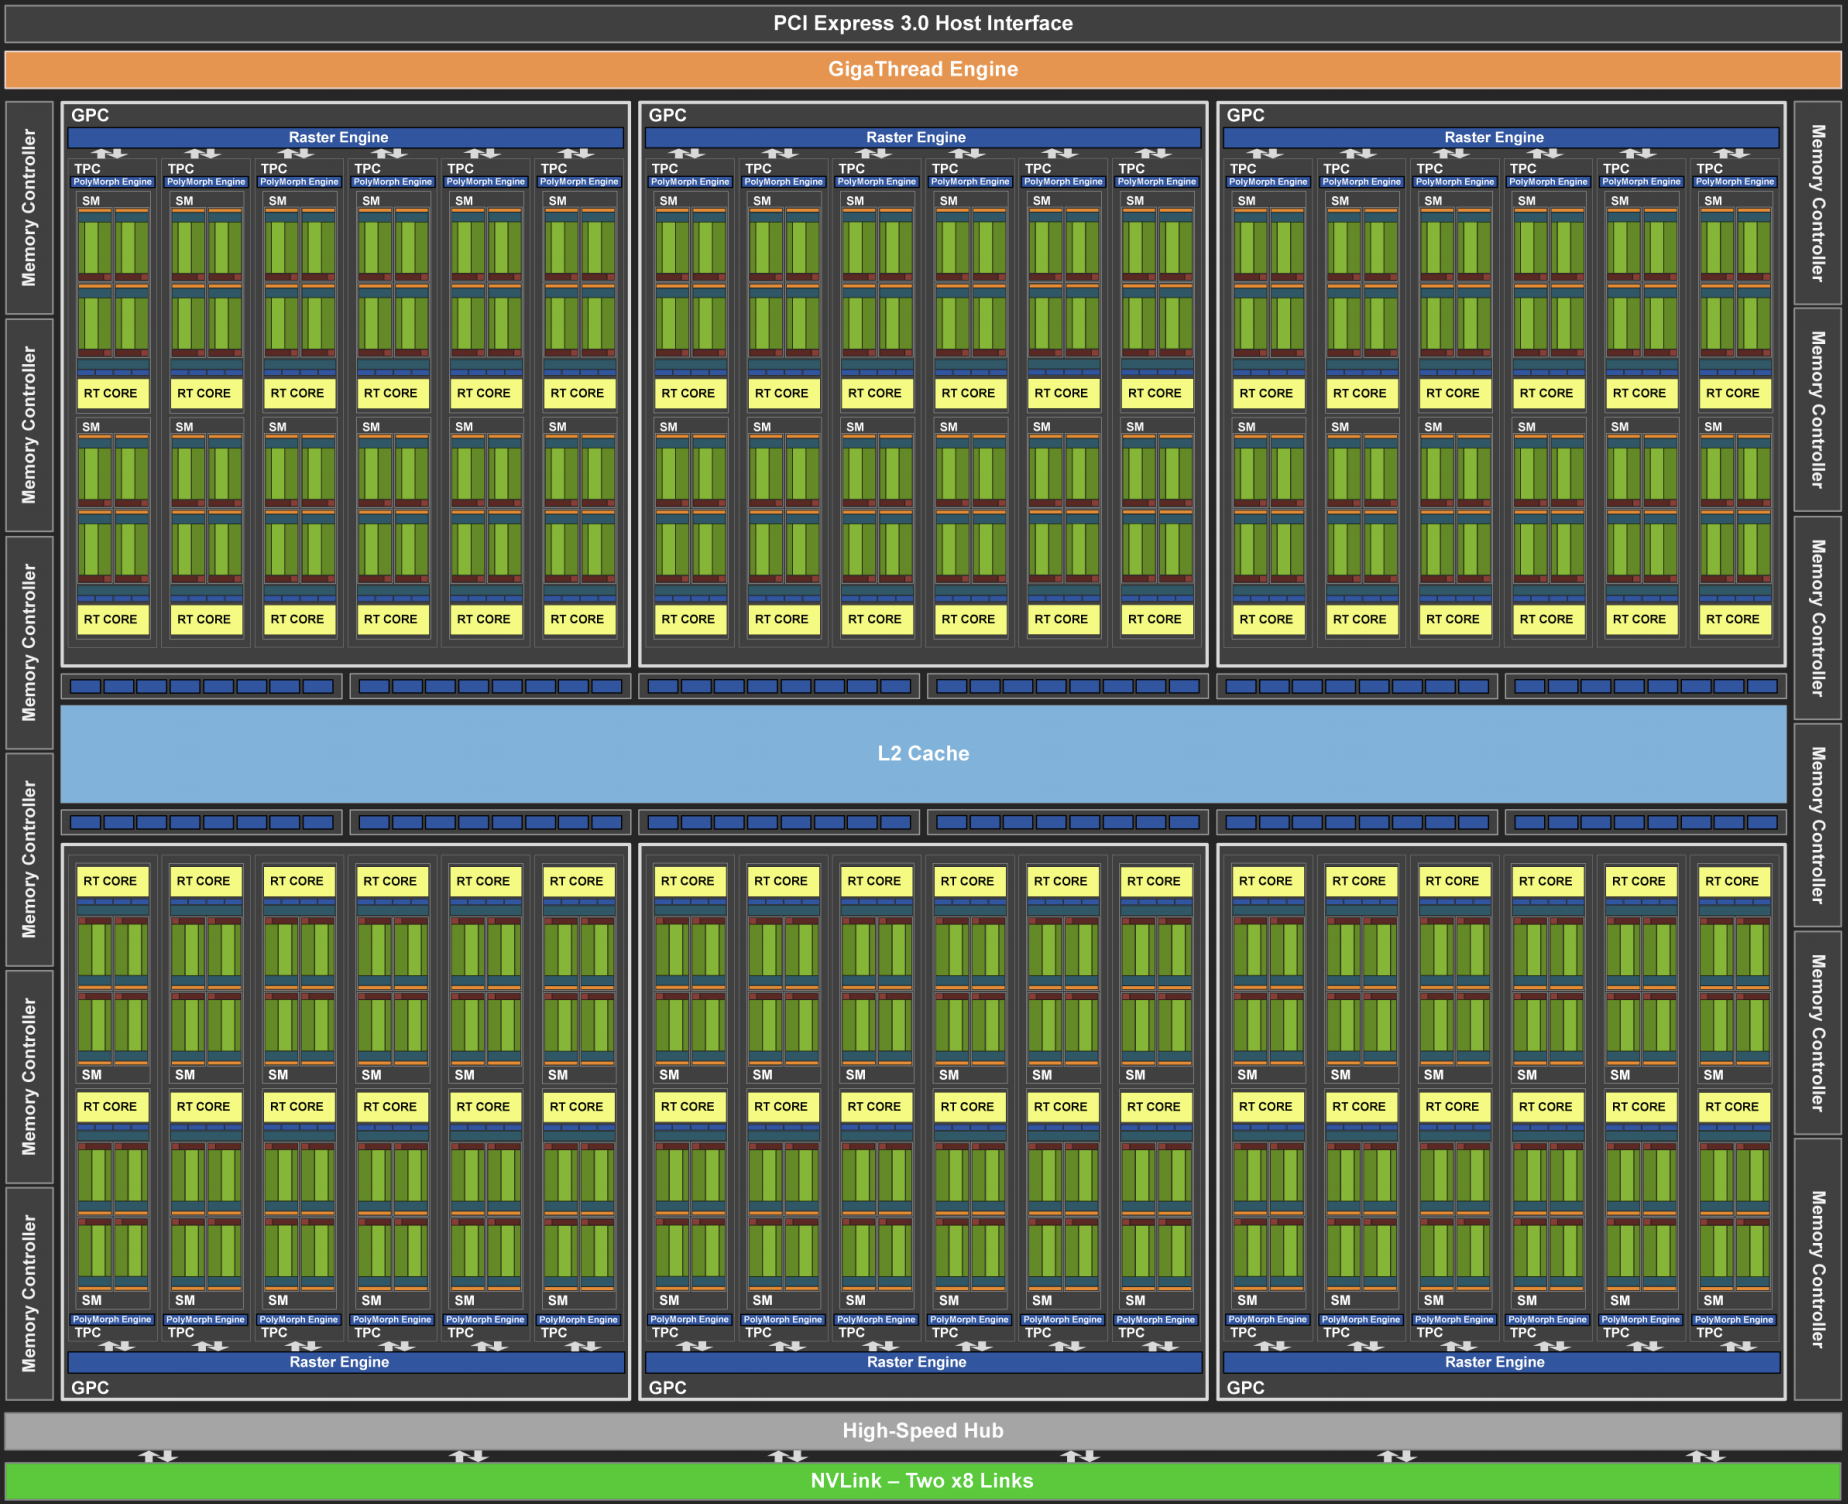 NVIDIA Turing Architecture (image courtesy of NVIDIA)